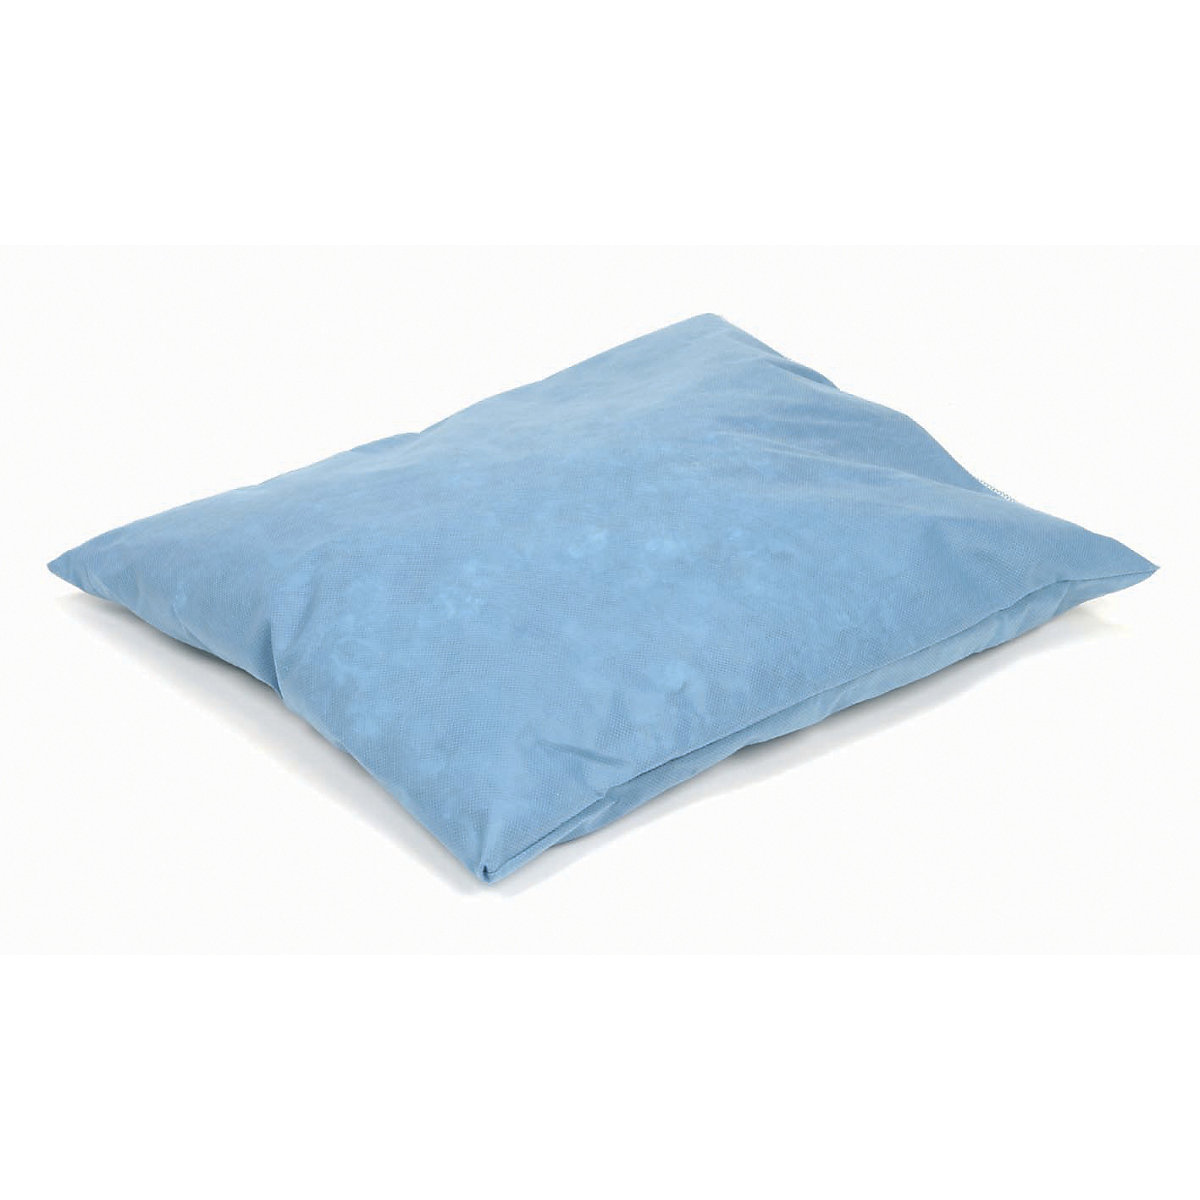 Absorbent fleece cushion, oil version, 600 x 800 mm, blue, pack of 4-6